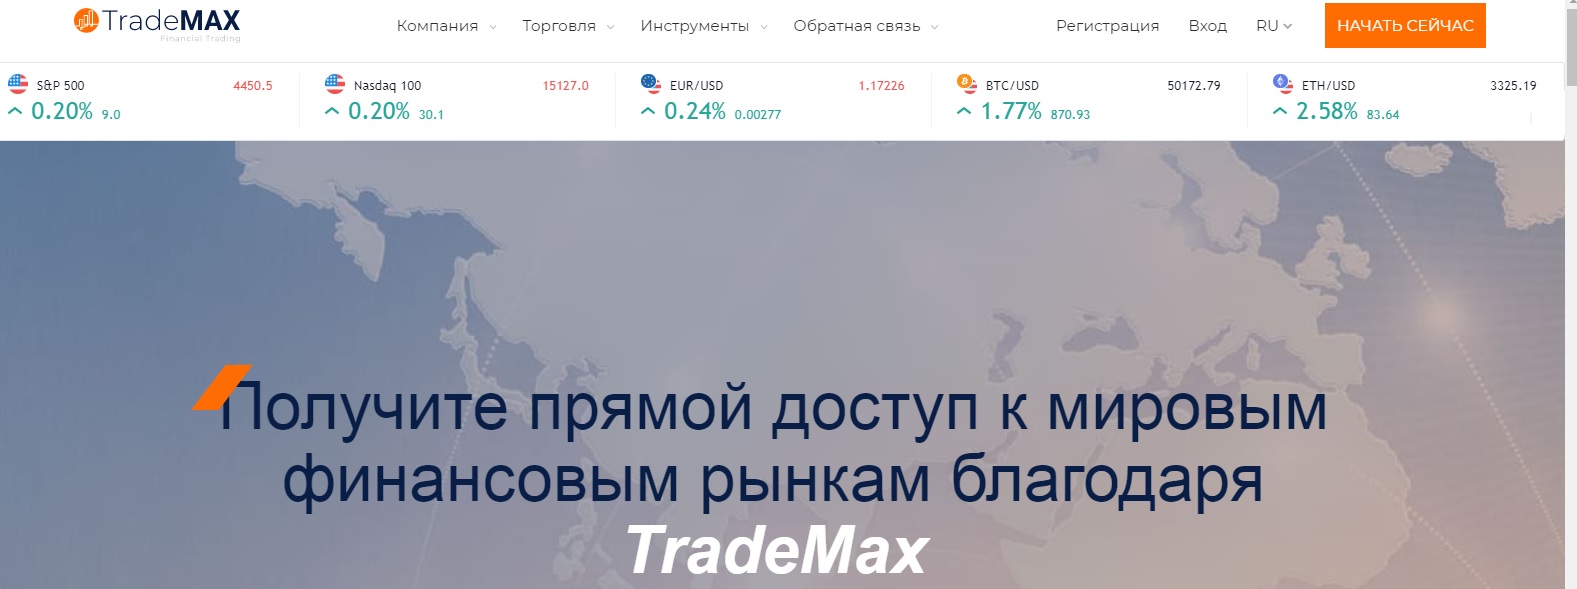 Trade Max